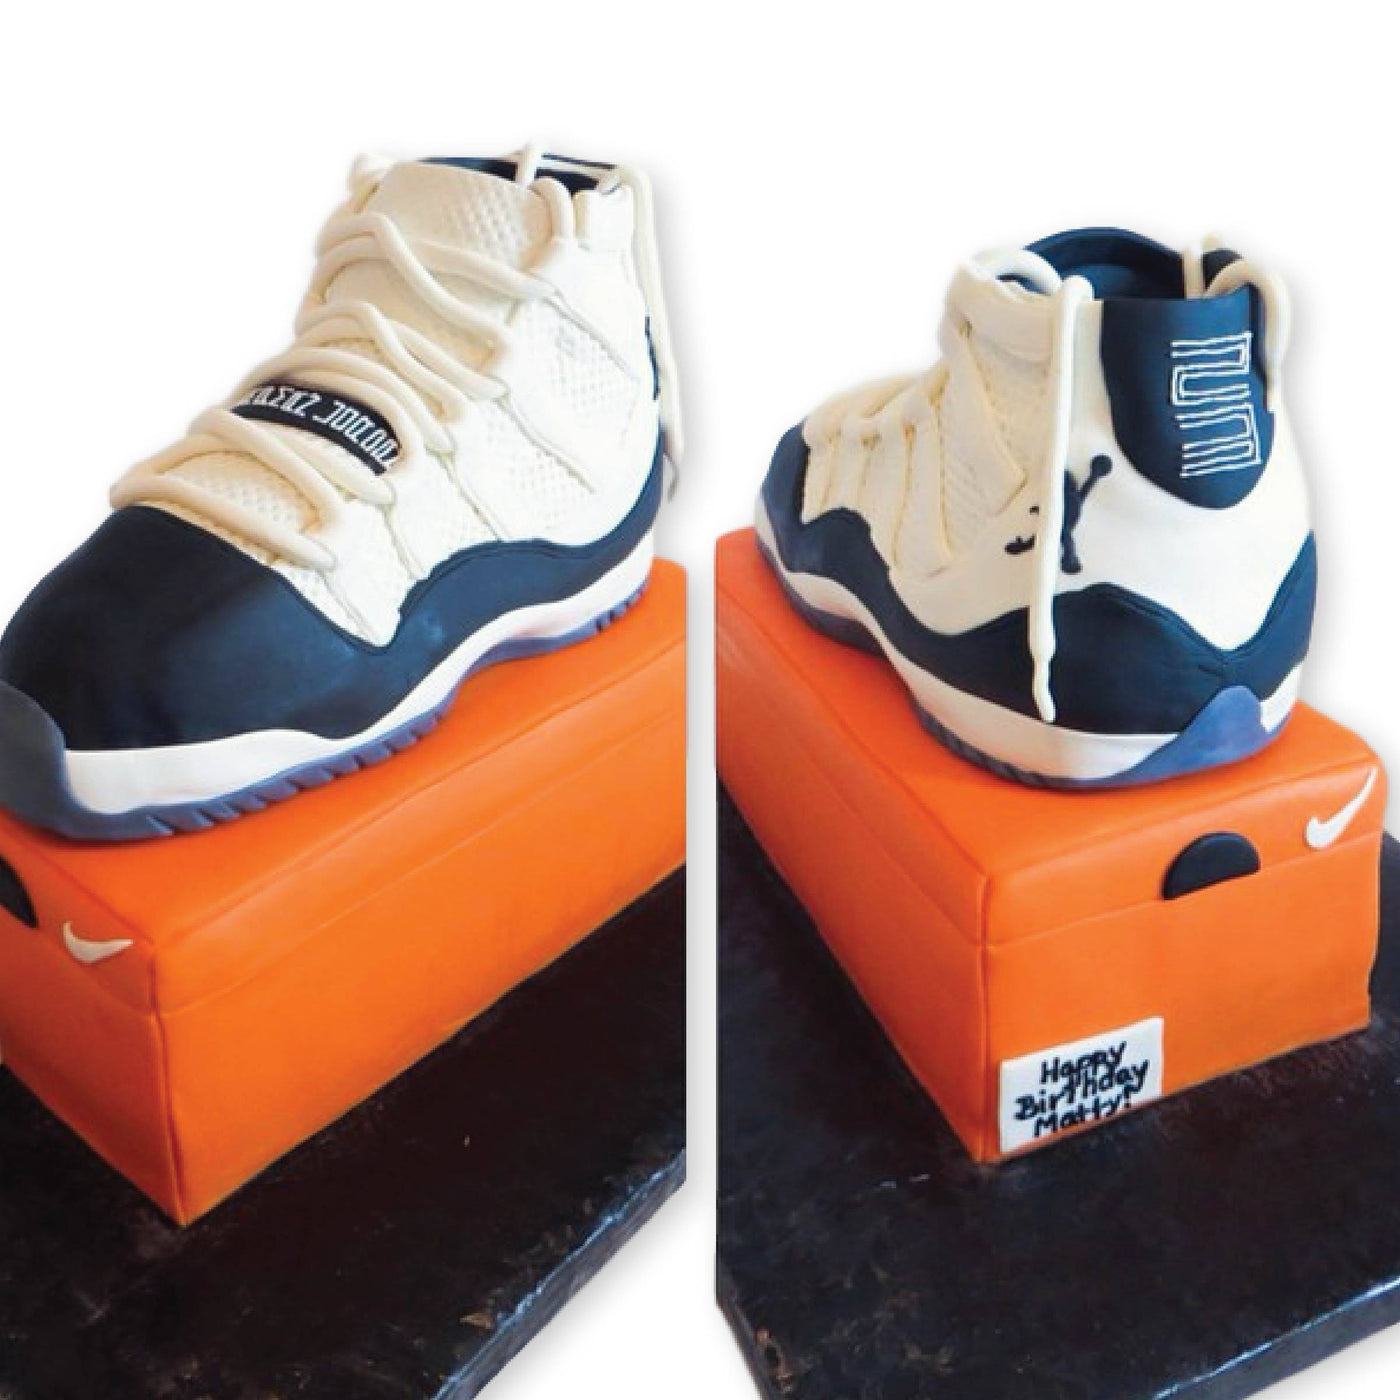 Jordan Shoe Box Cake - Sweet E's Bake Shop - The Cake Shop